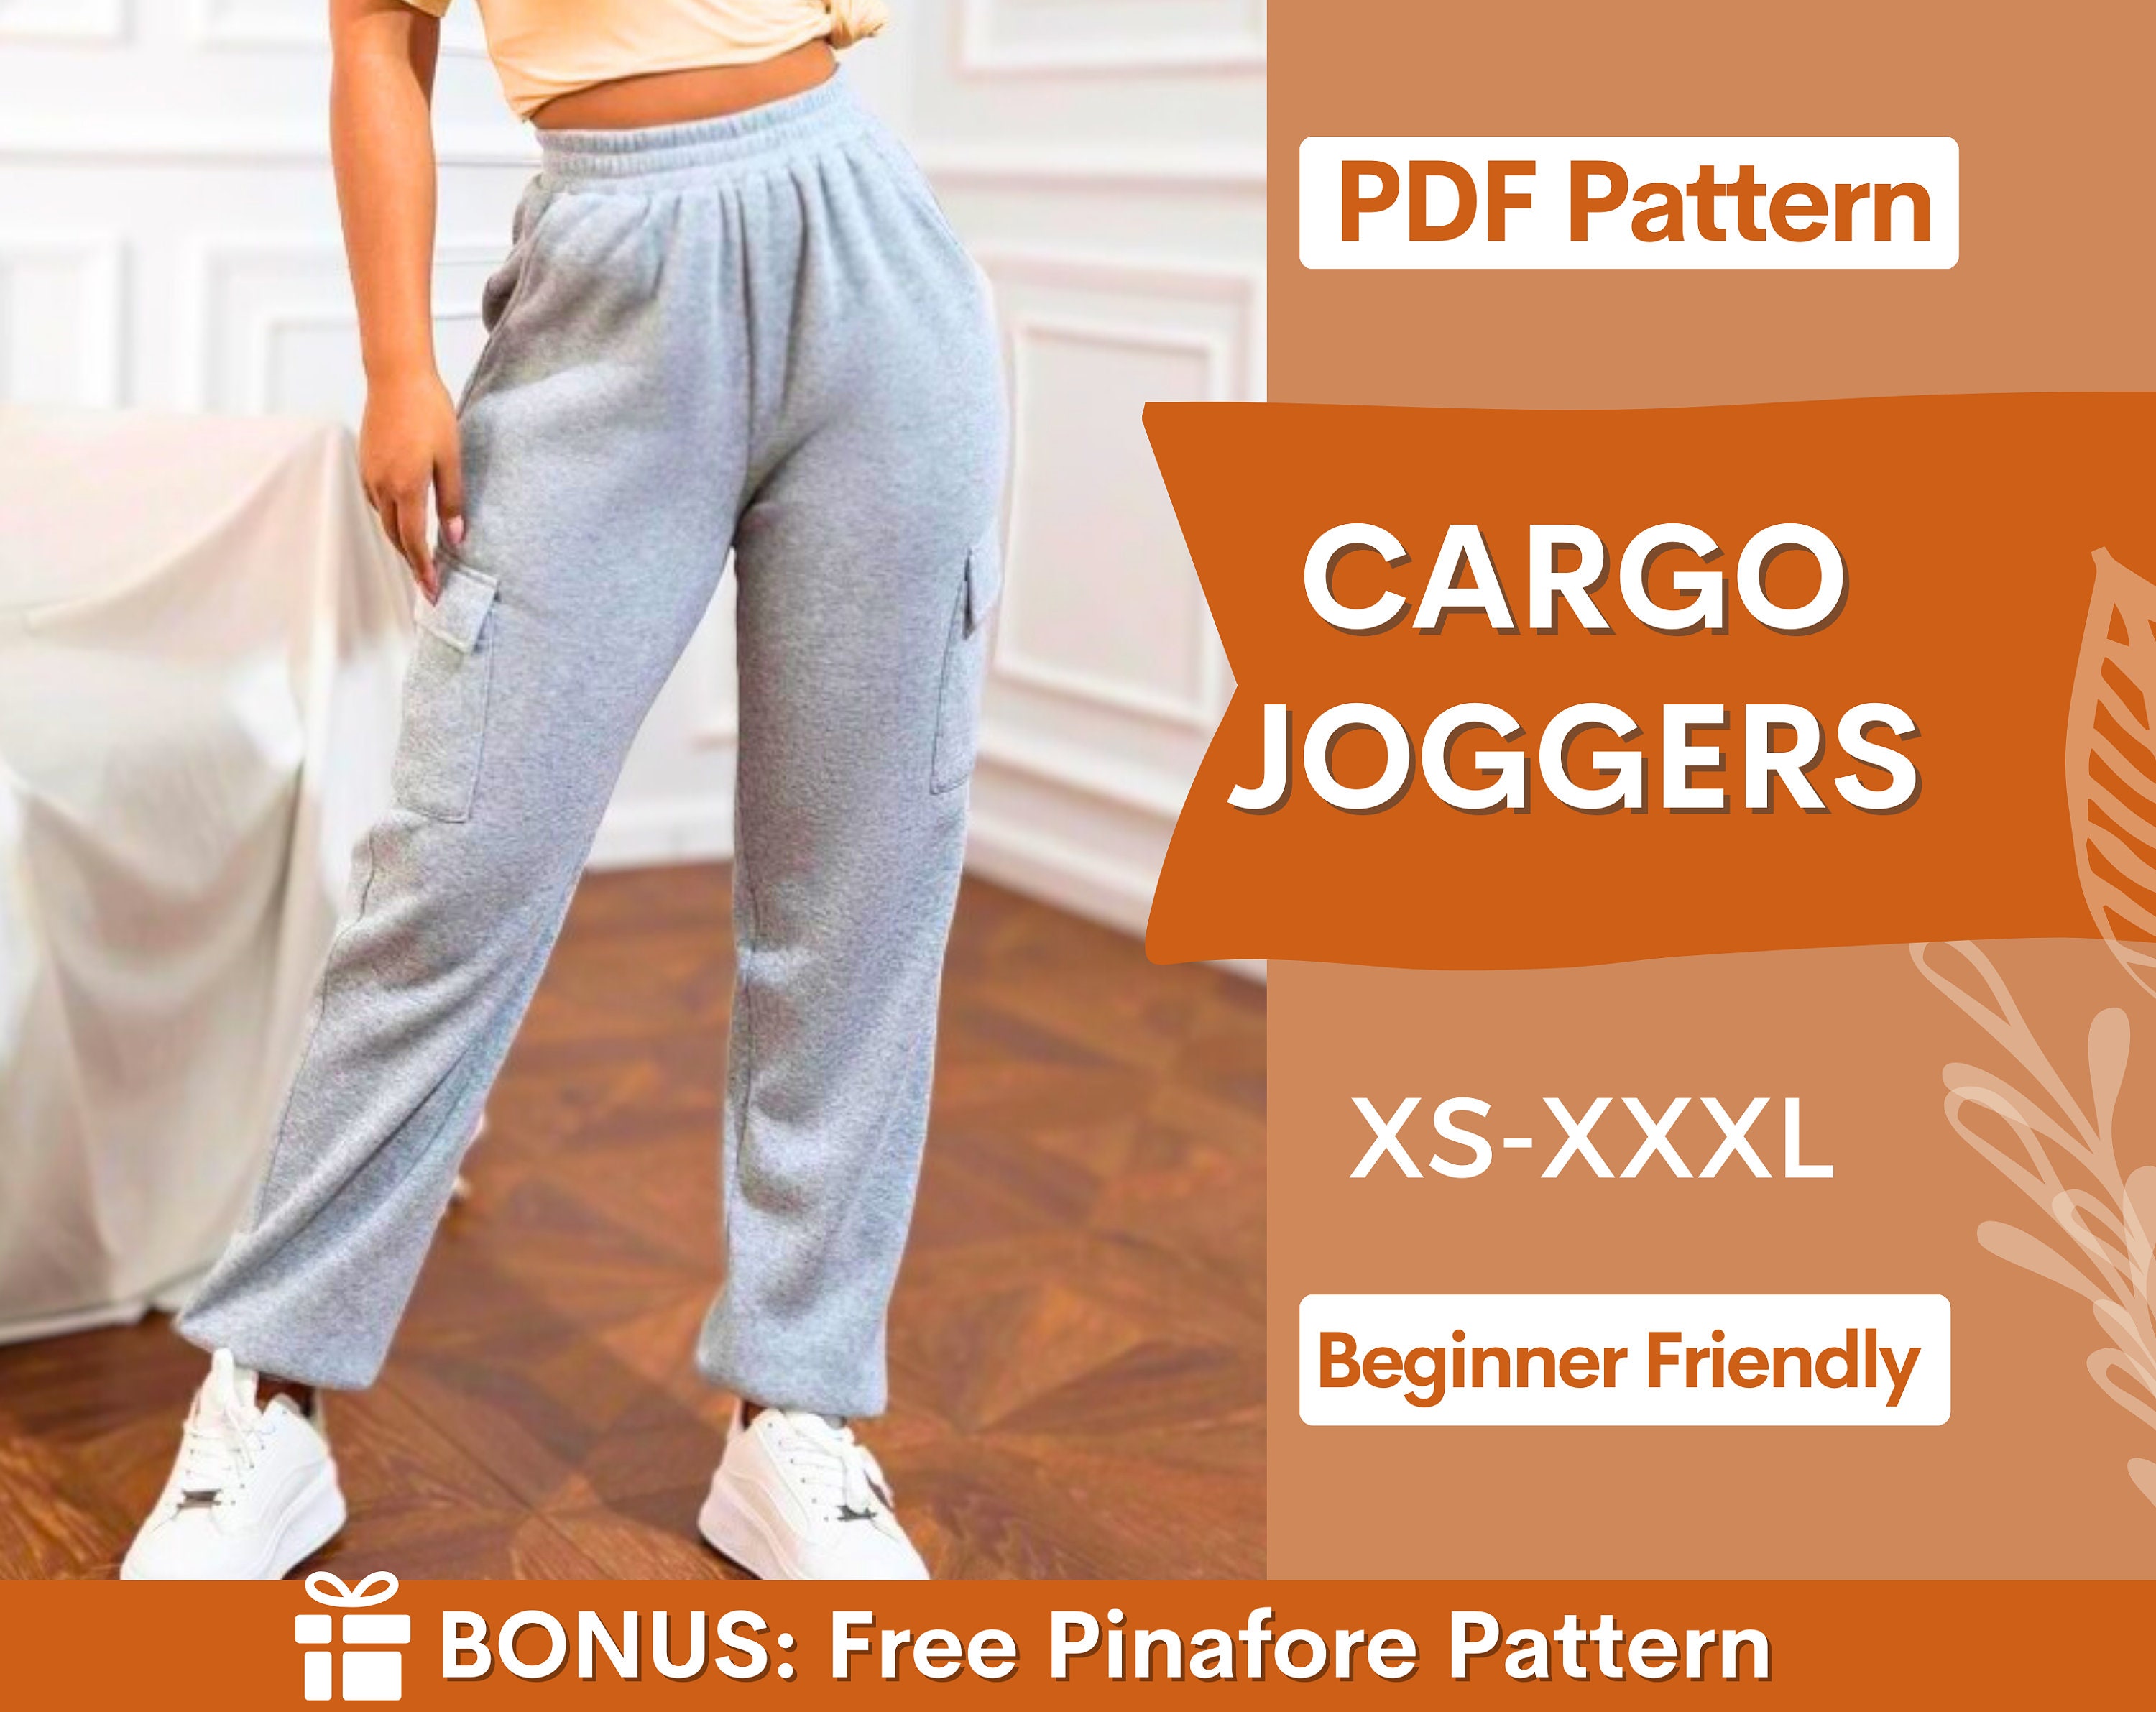 Women's Sweatpants Sewing Pattern Pants XS-XXXL Instant Download